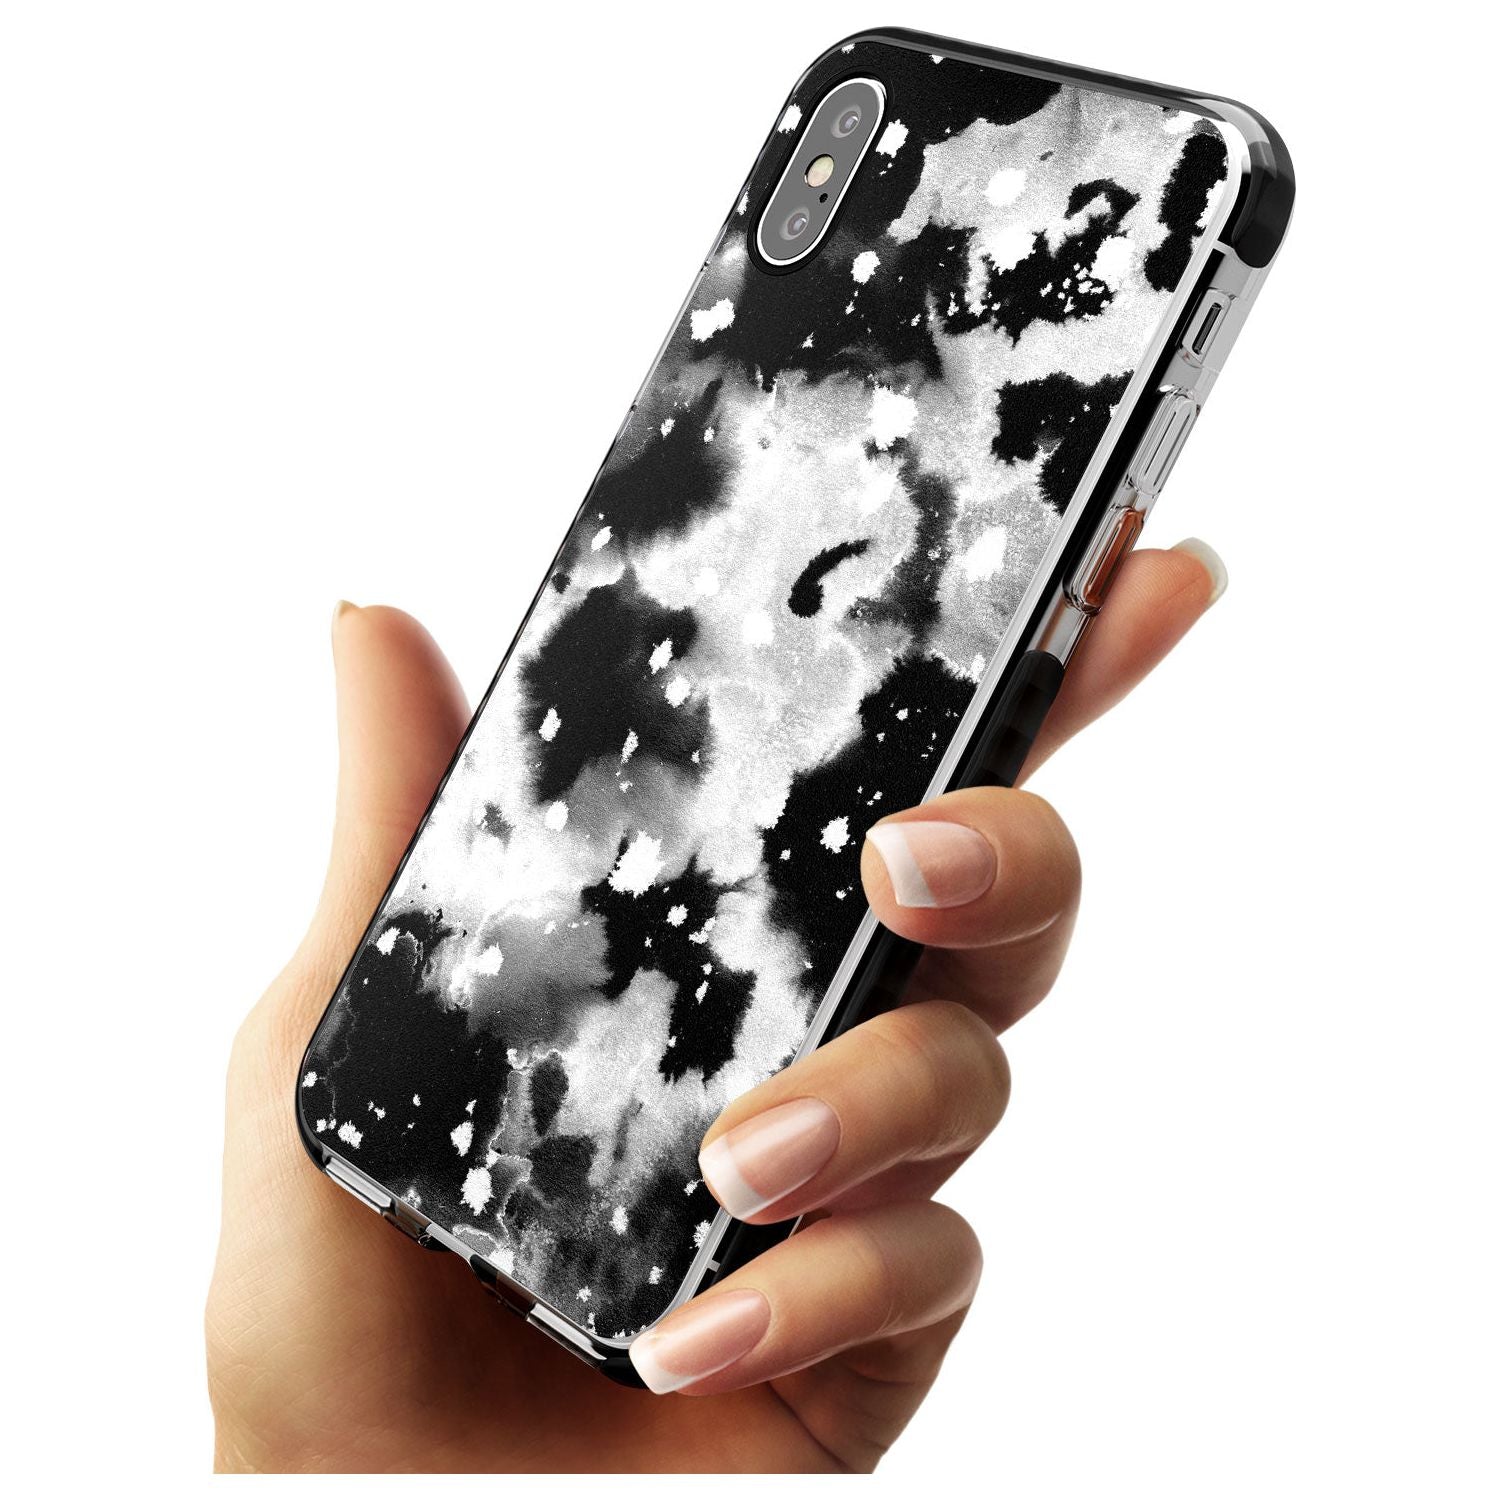 Black & White Acid Wash Tie-Dye Pattern Black Impact Phone Case for iPhone X XS Max XR